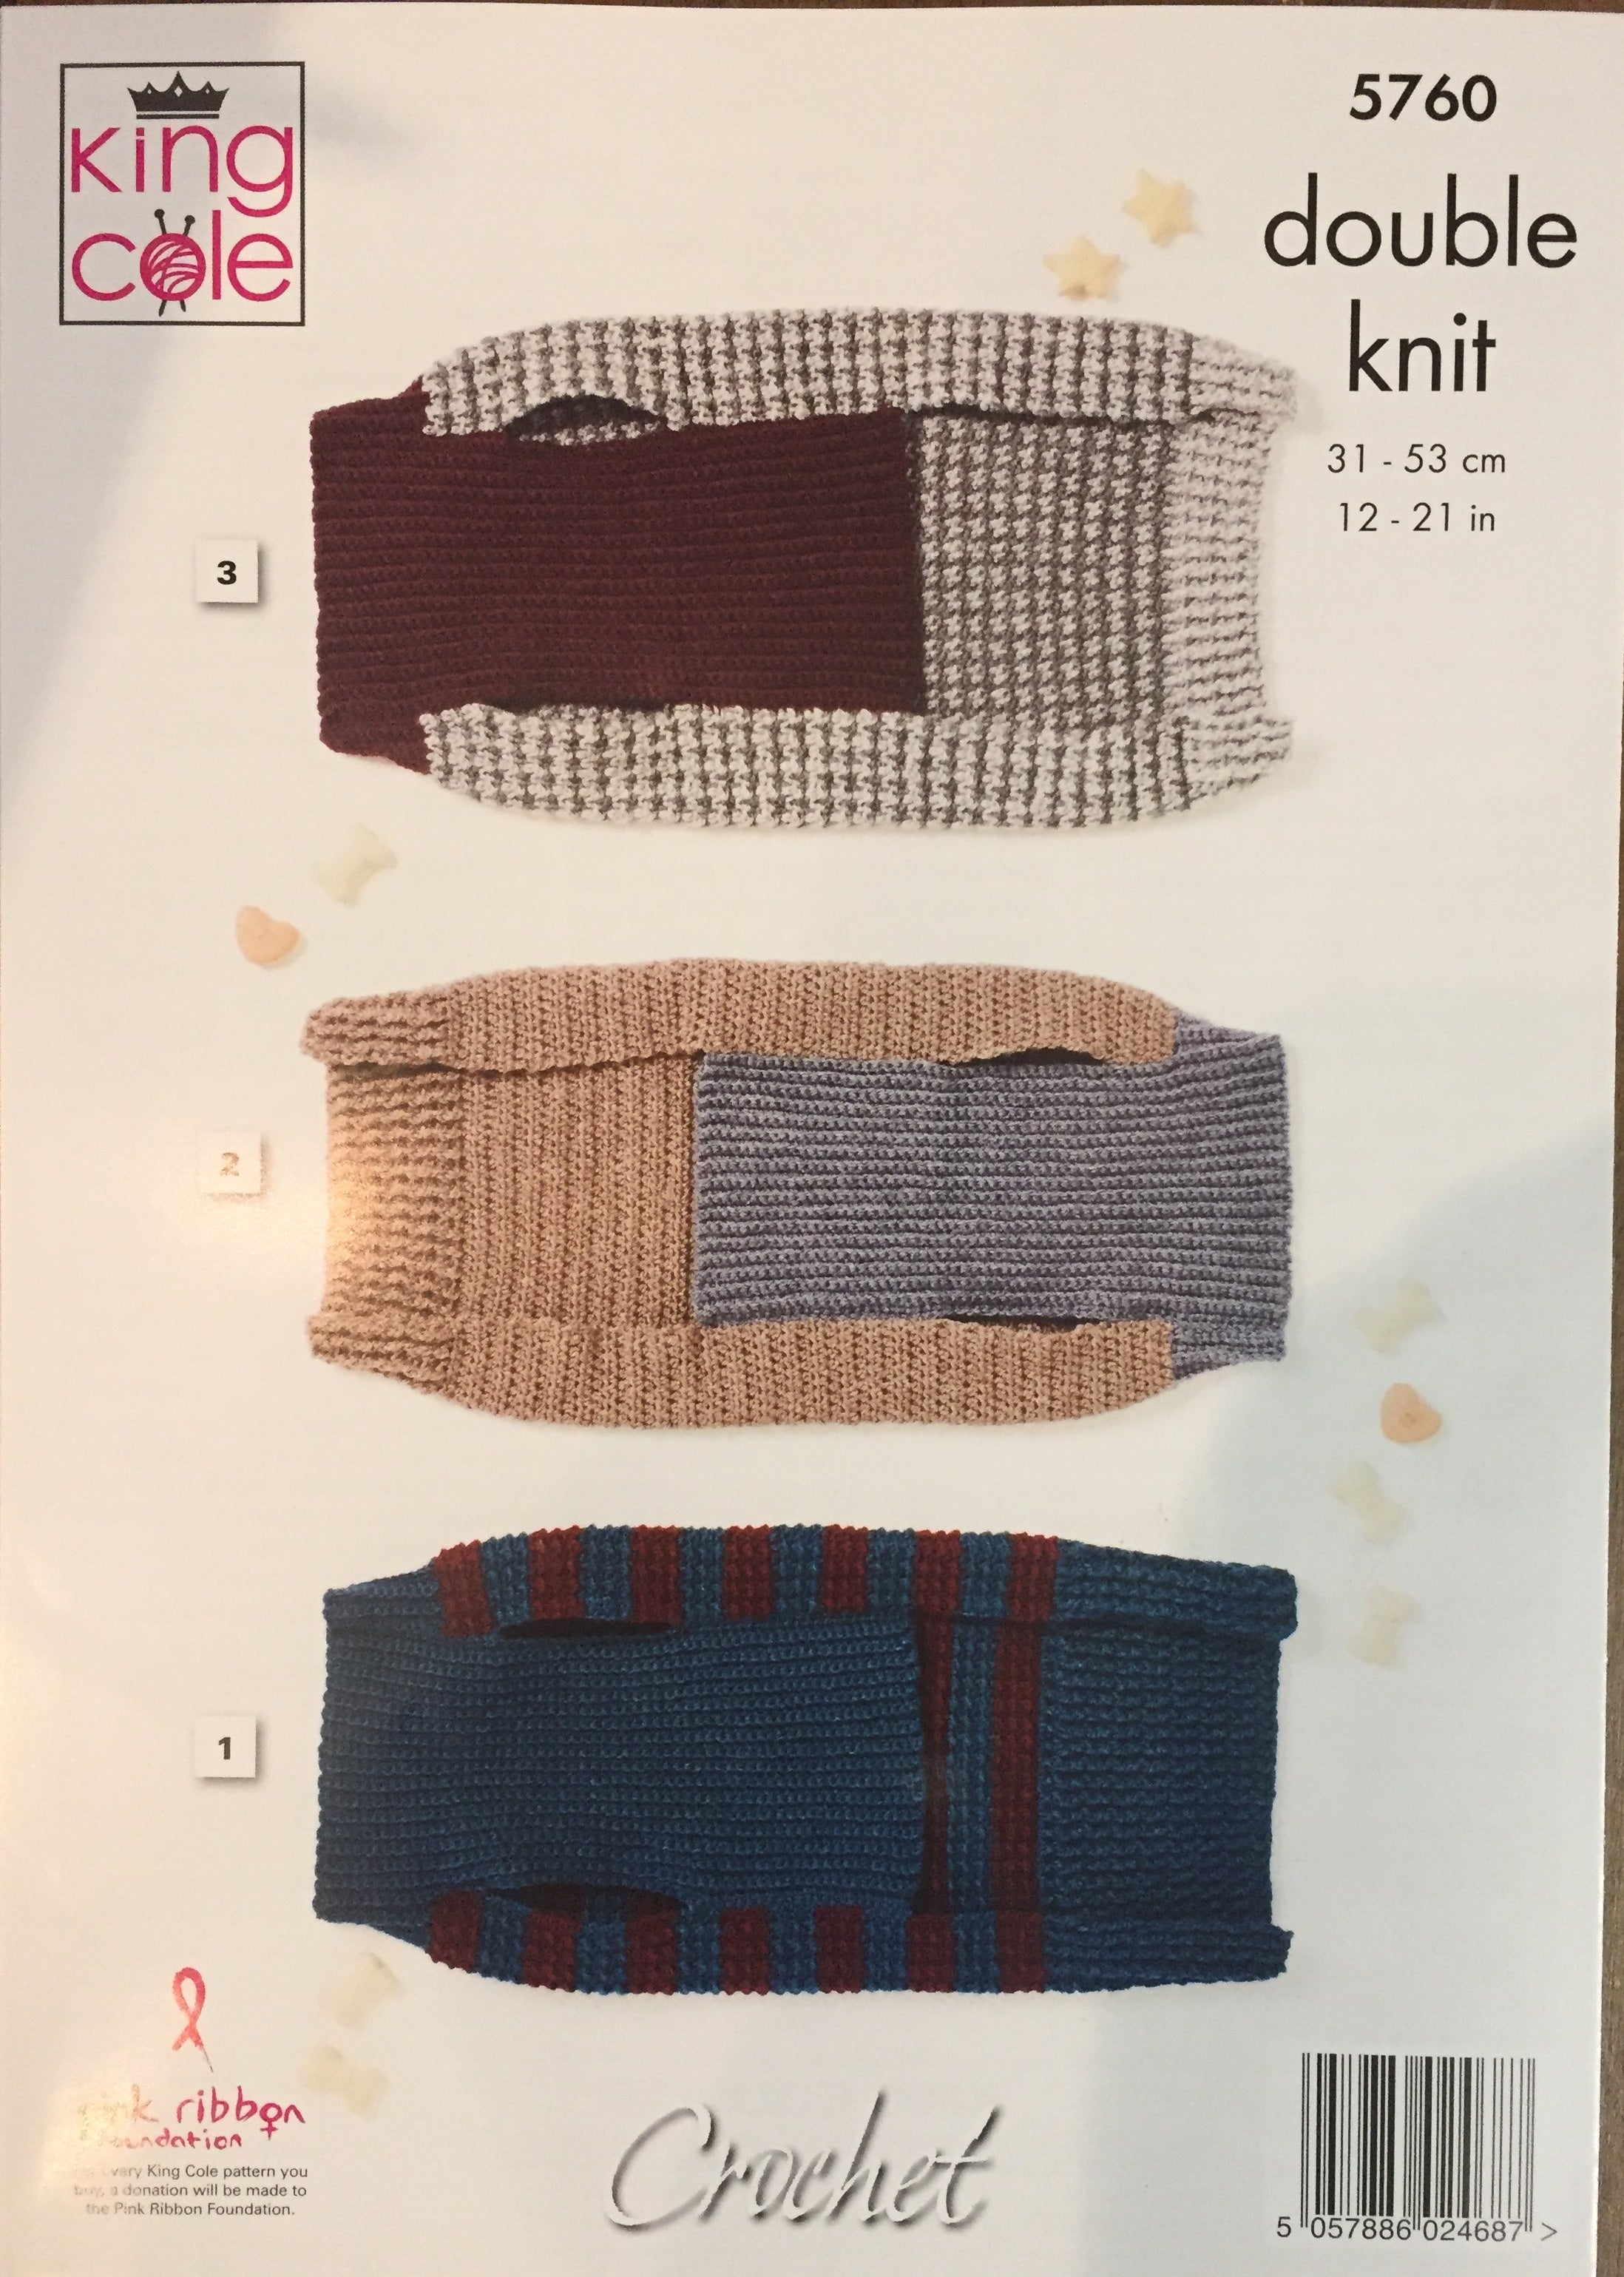 King Cole 5760 Crochet Dog Coats